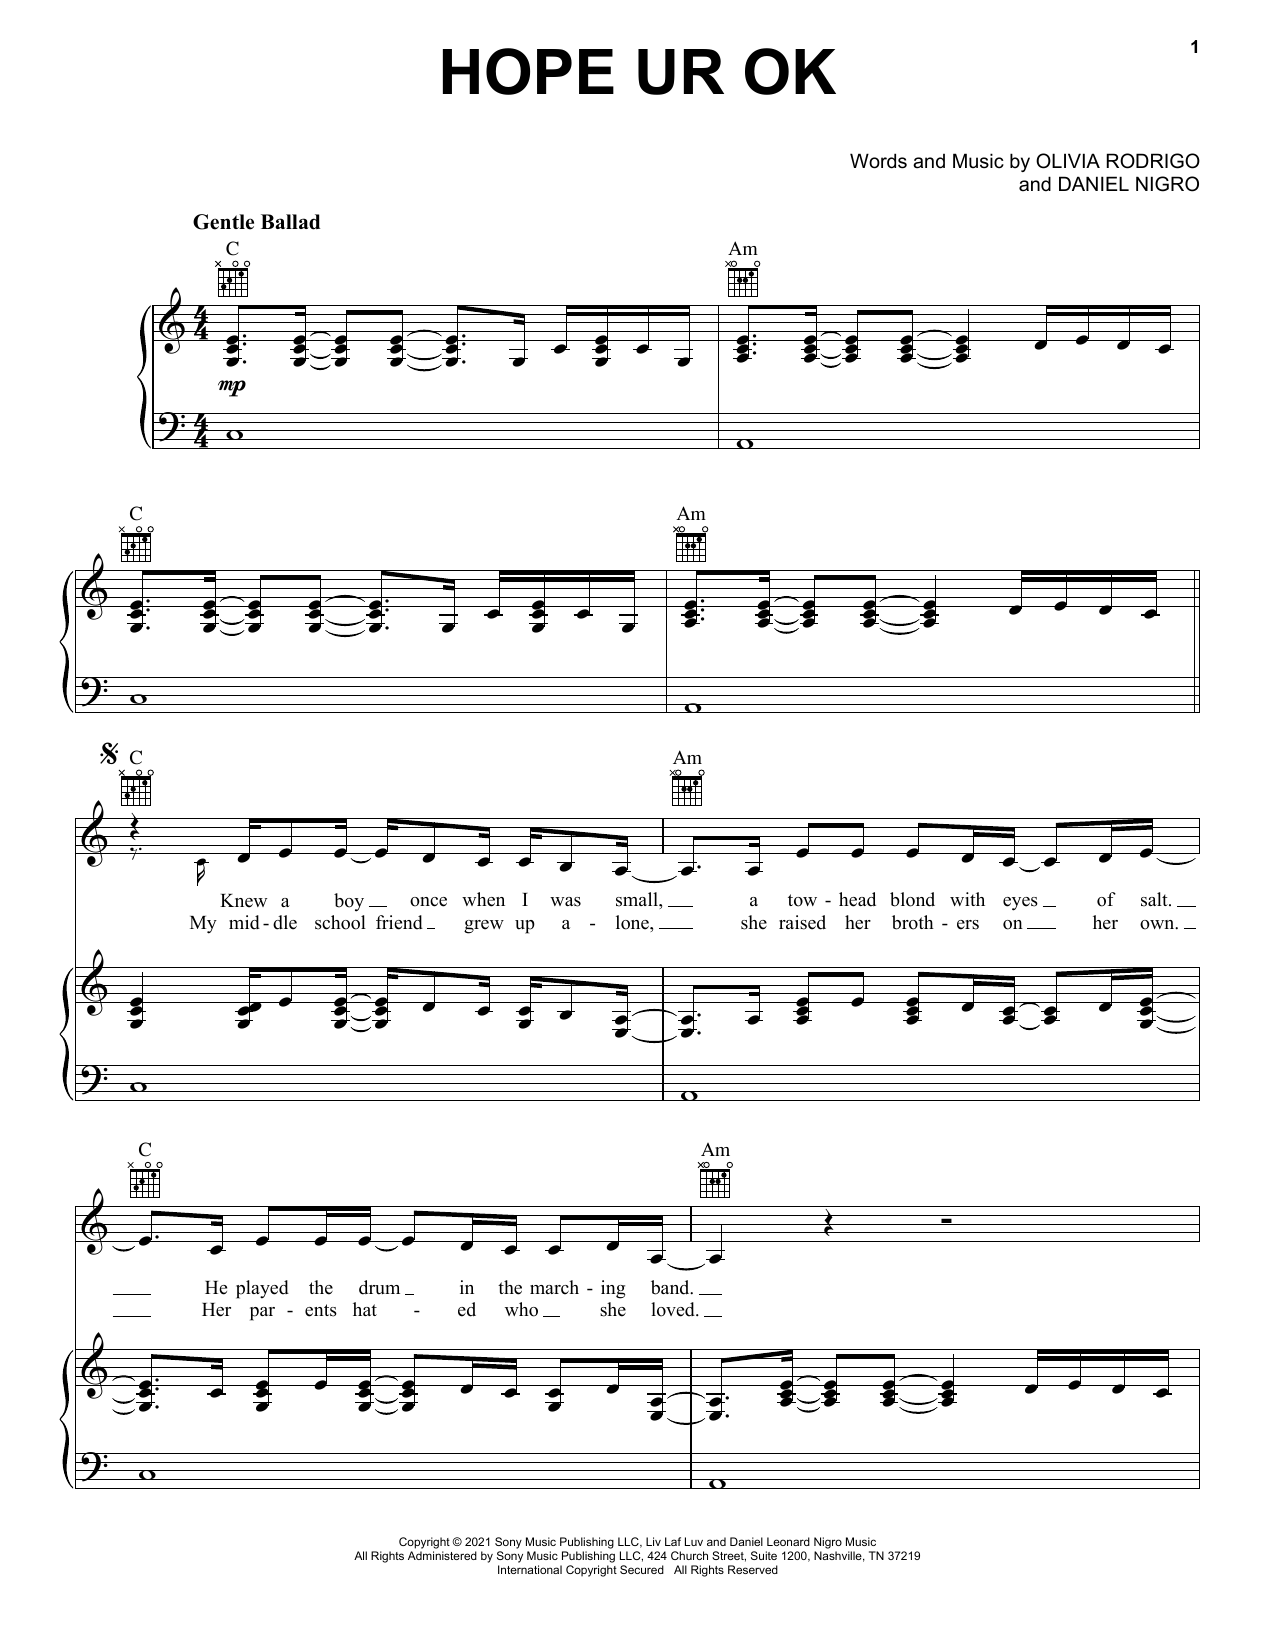 Olivia Rodrigo hope ur ok Sheet Music Notes & Chords for Piano, Vocal & Guitar (Right-Hand Melody) - Download or Print PDF